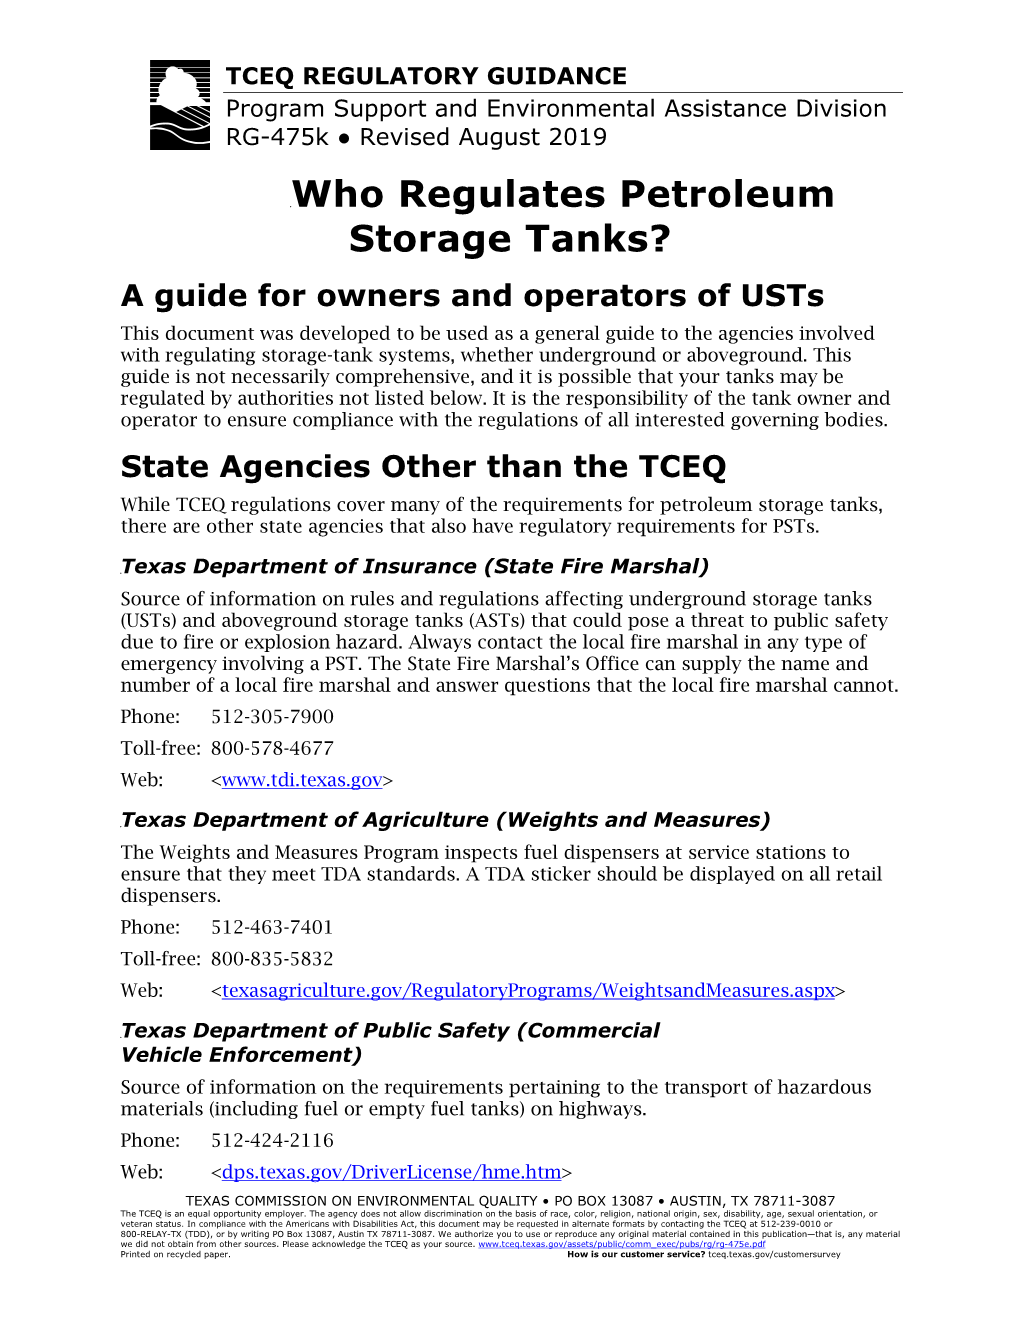 Who Regulates Petroleum Storage Tanks?